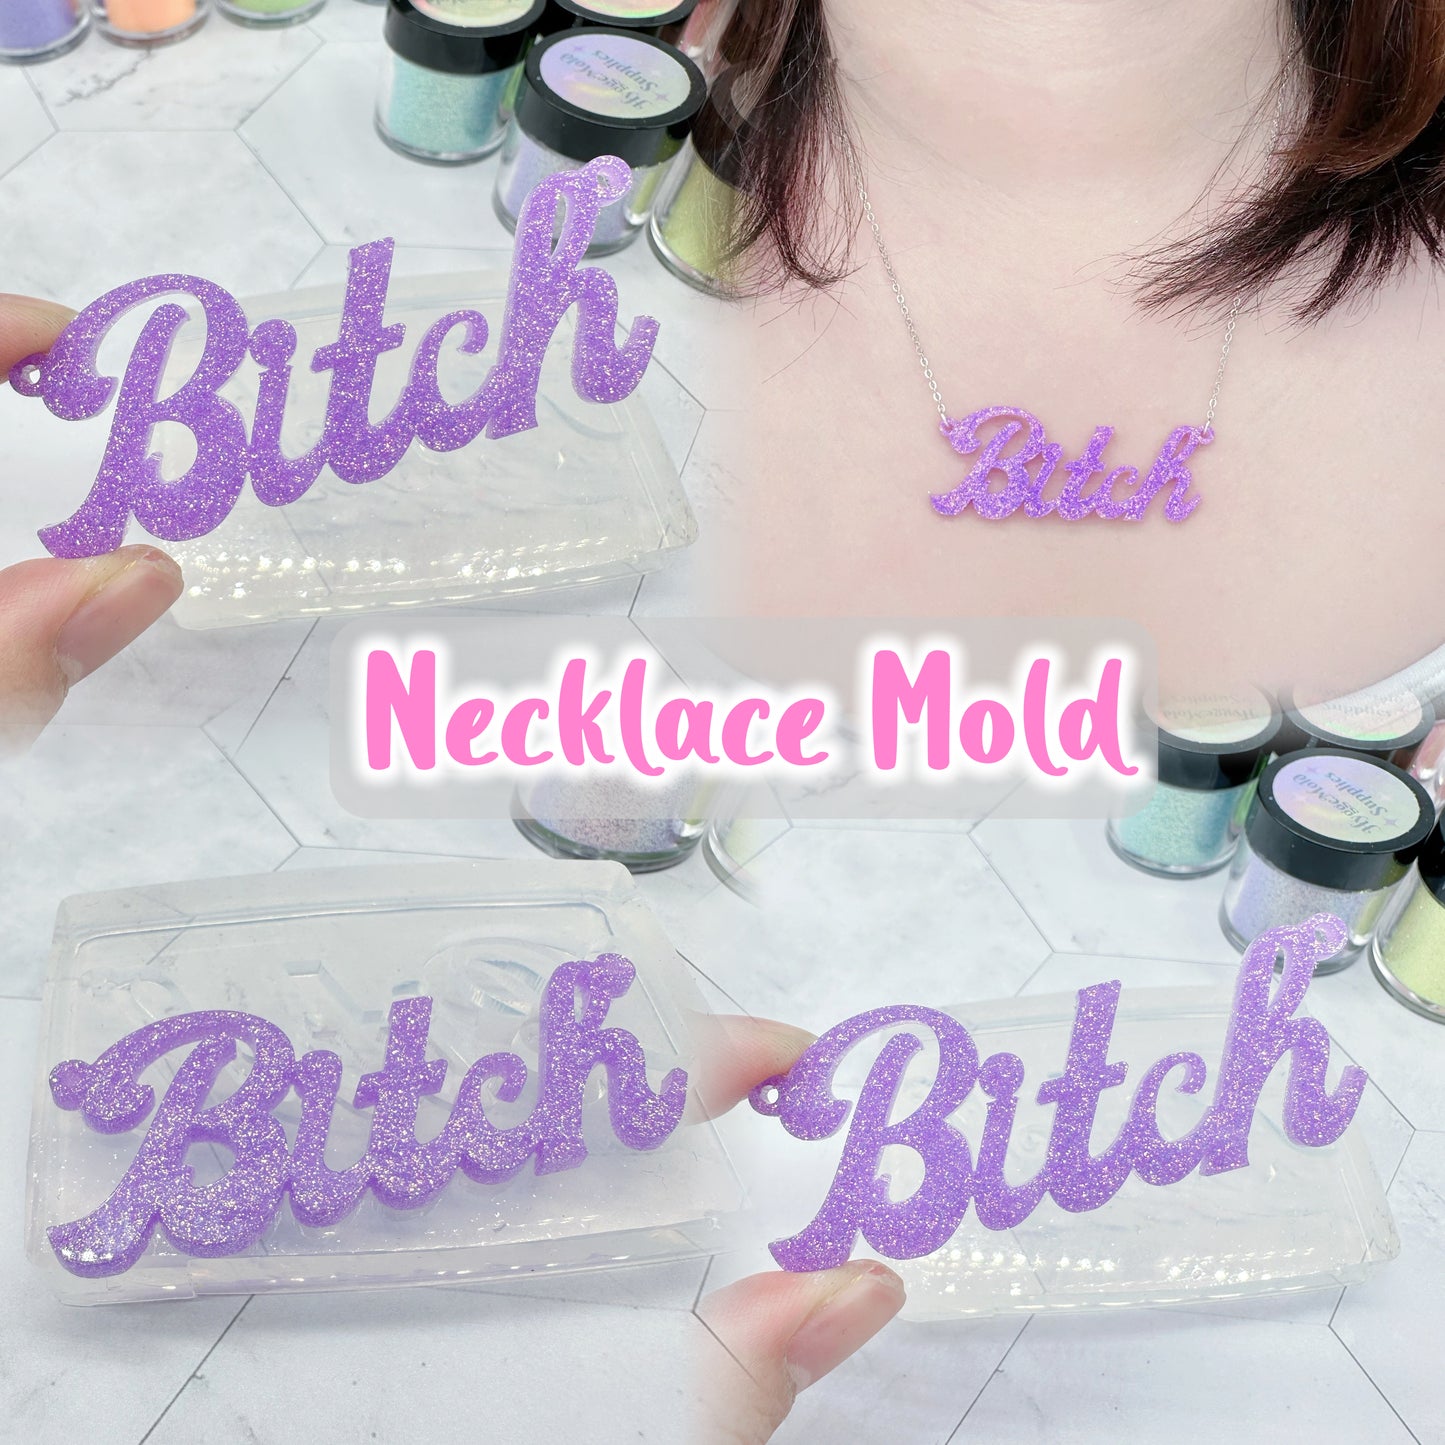 6.5cm Bitch Slogan Necklace Mold